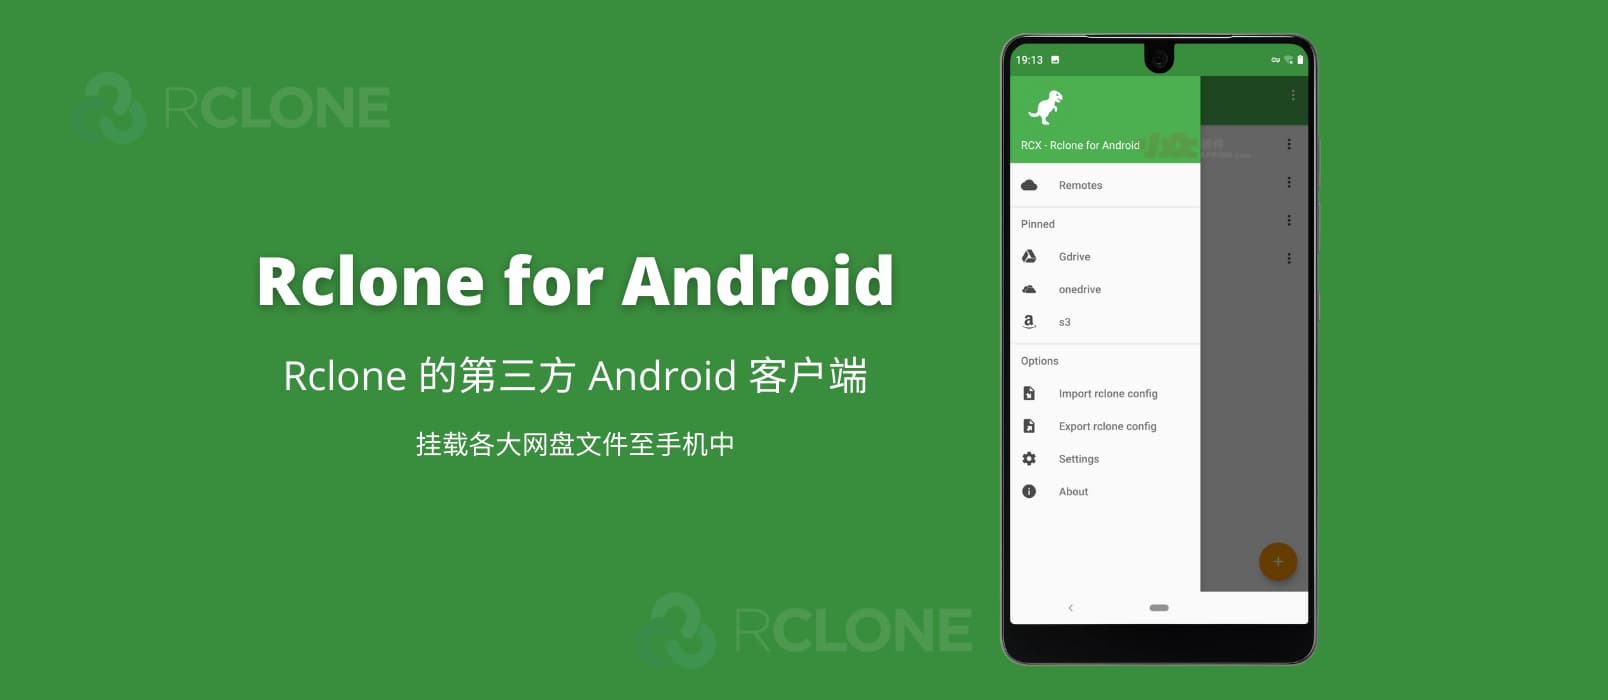 Rclone for Android - 云服务/网盘文件管理工具 Rclone 的 Android 客户端